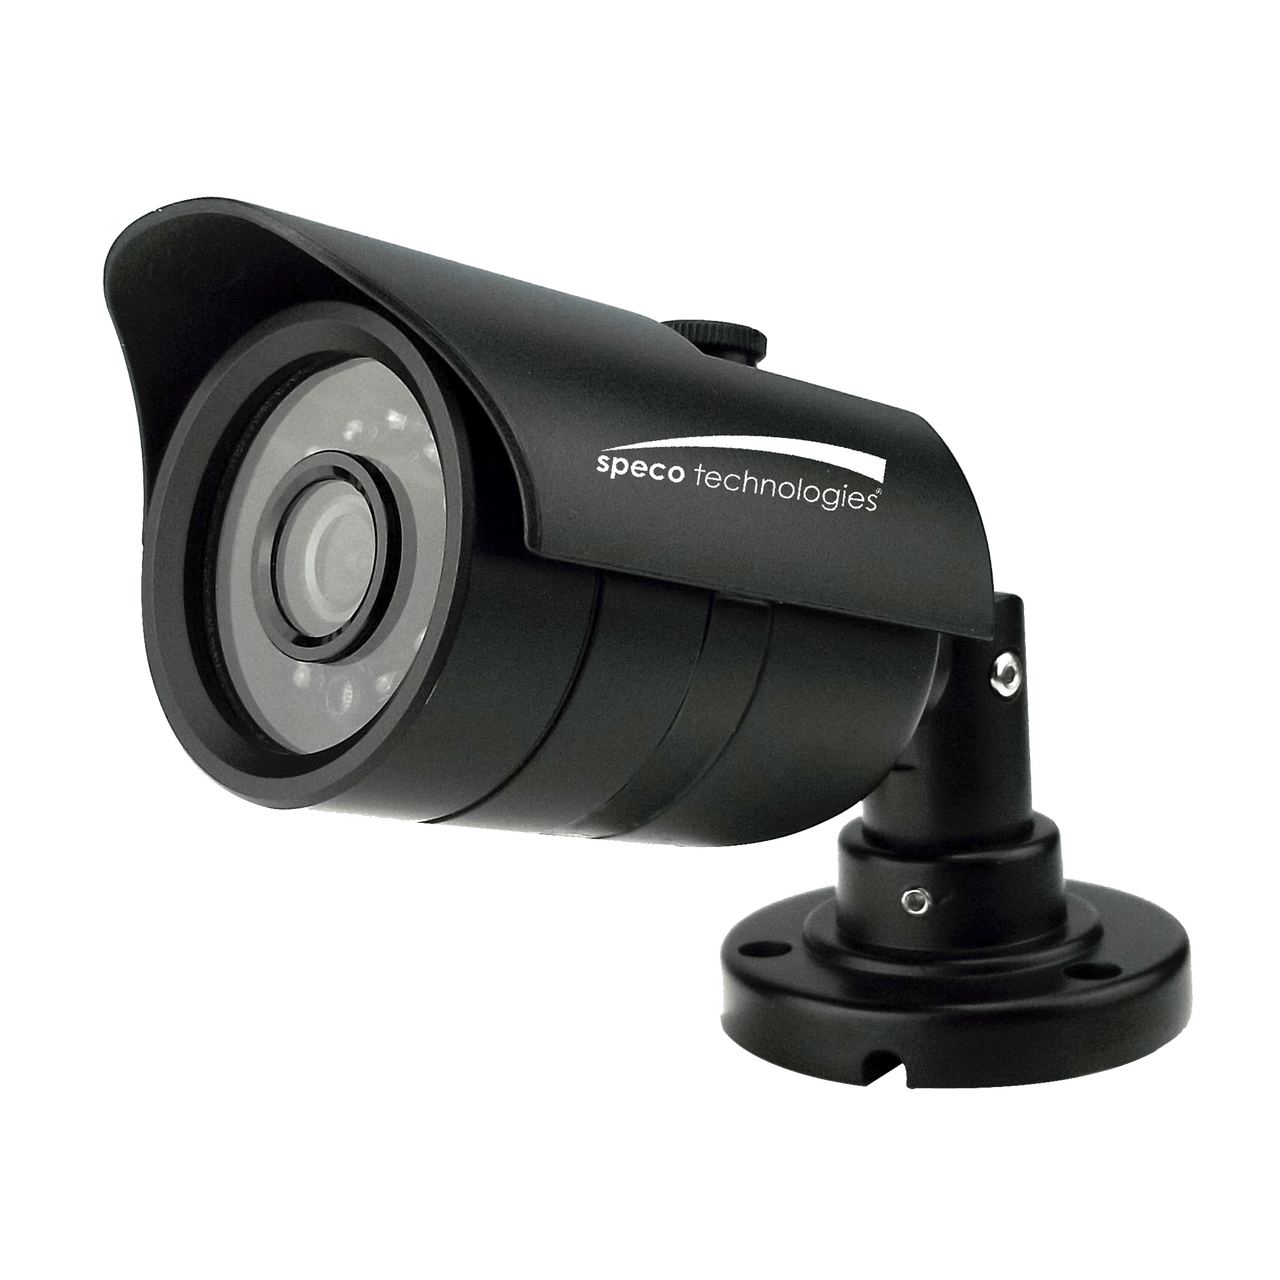 Speco Technologies VL62T 2MP HD-TVI Day/Night Camera w/12 IR LEDs, 3.6mm Lens, Black Housing (VL62T)